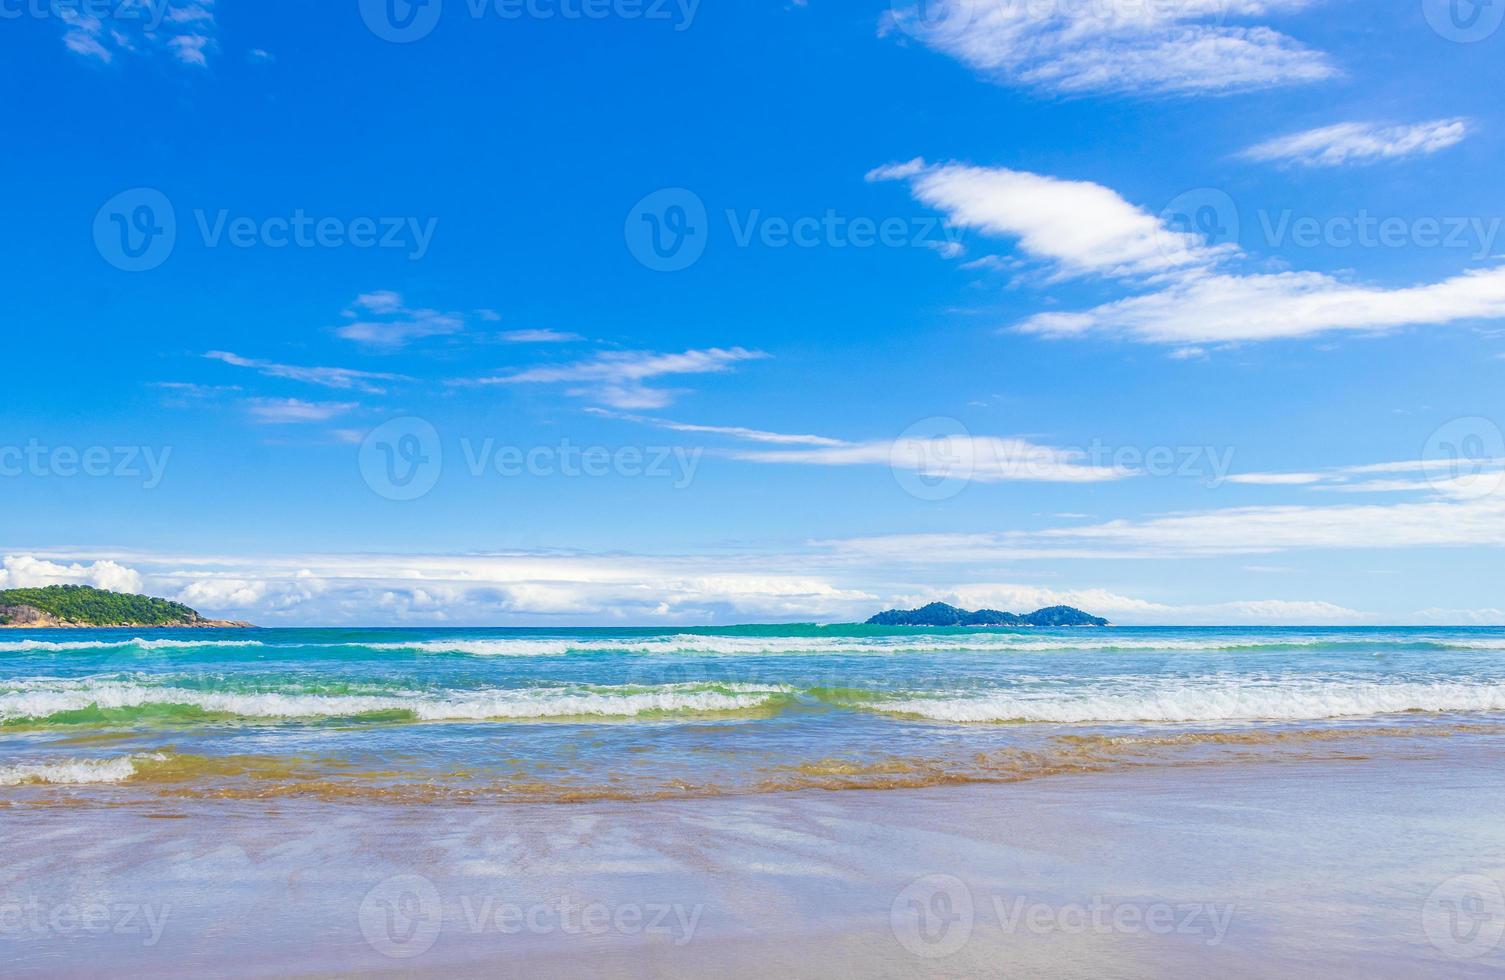 praia lopes mendes strand op het tropische eiland ilha grande brazilië. foto